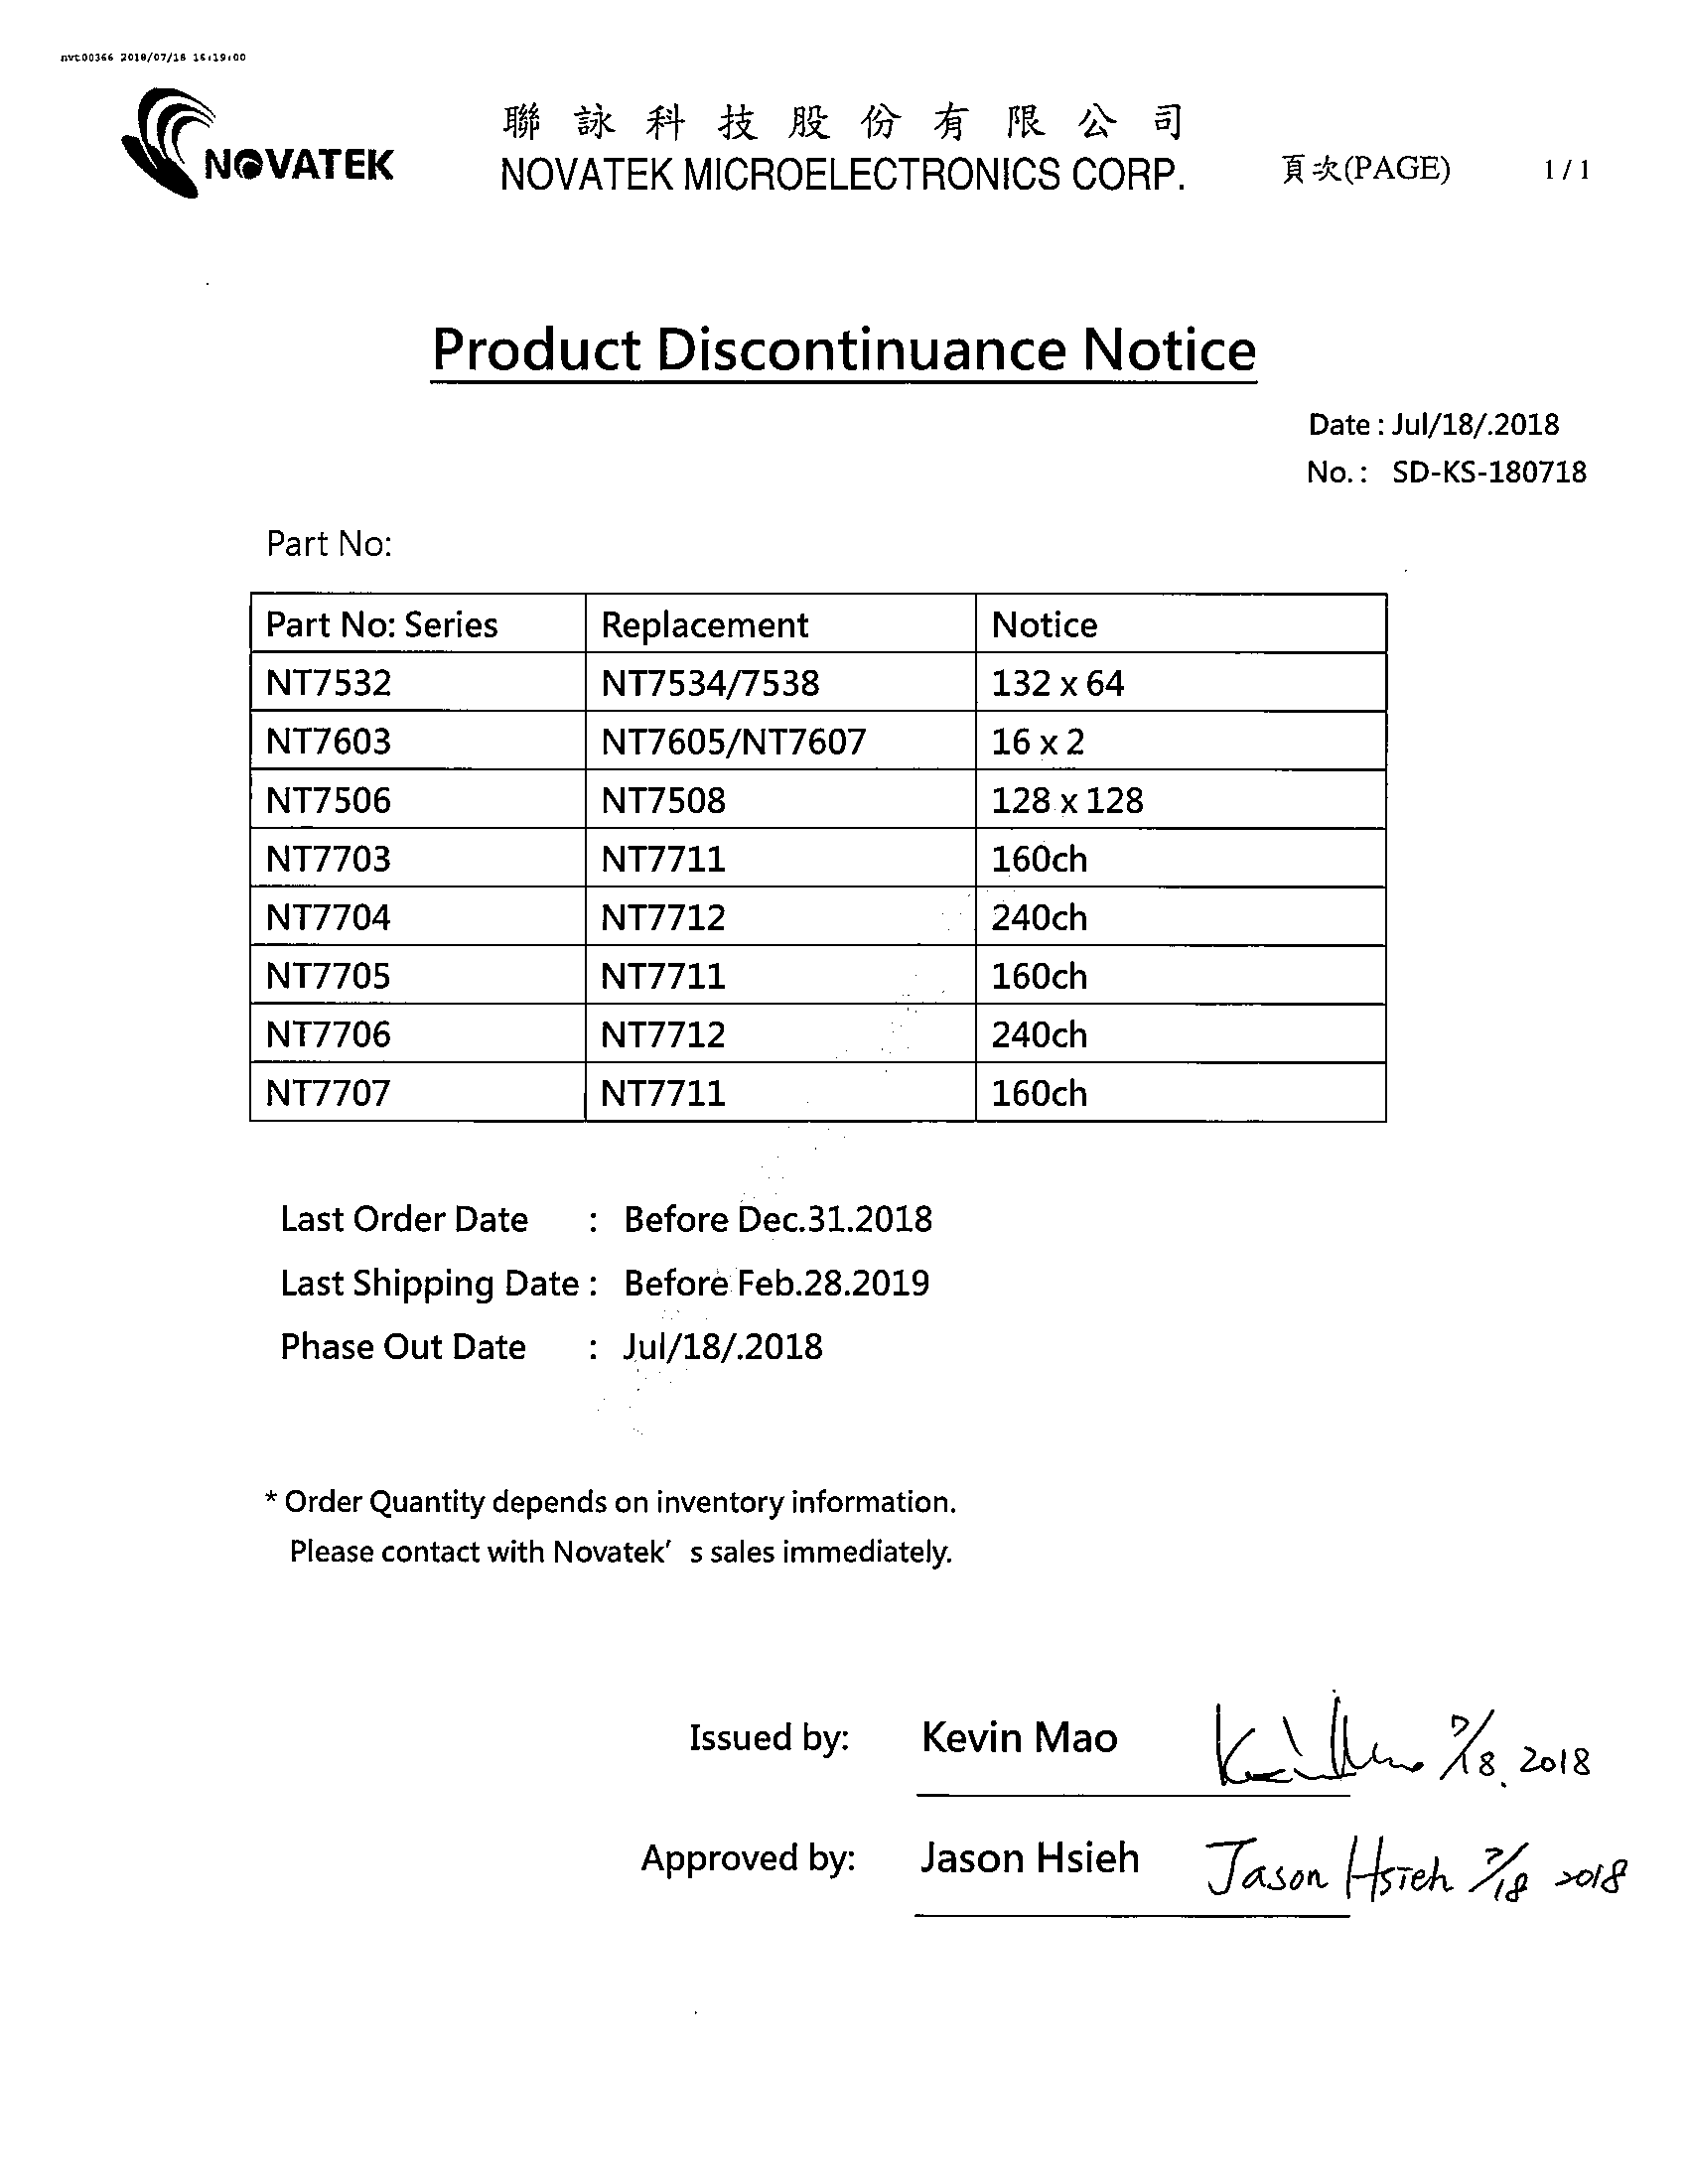 NOVATEK STN Product Discontinuance Notice